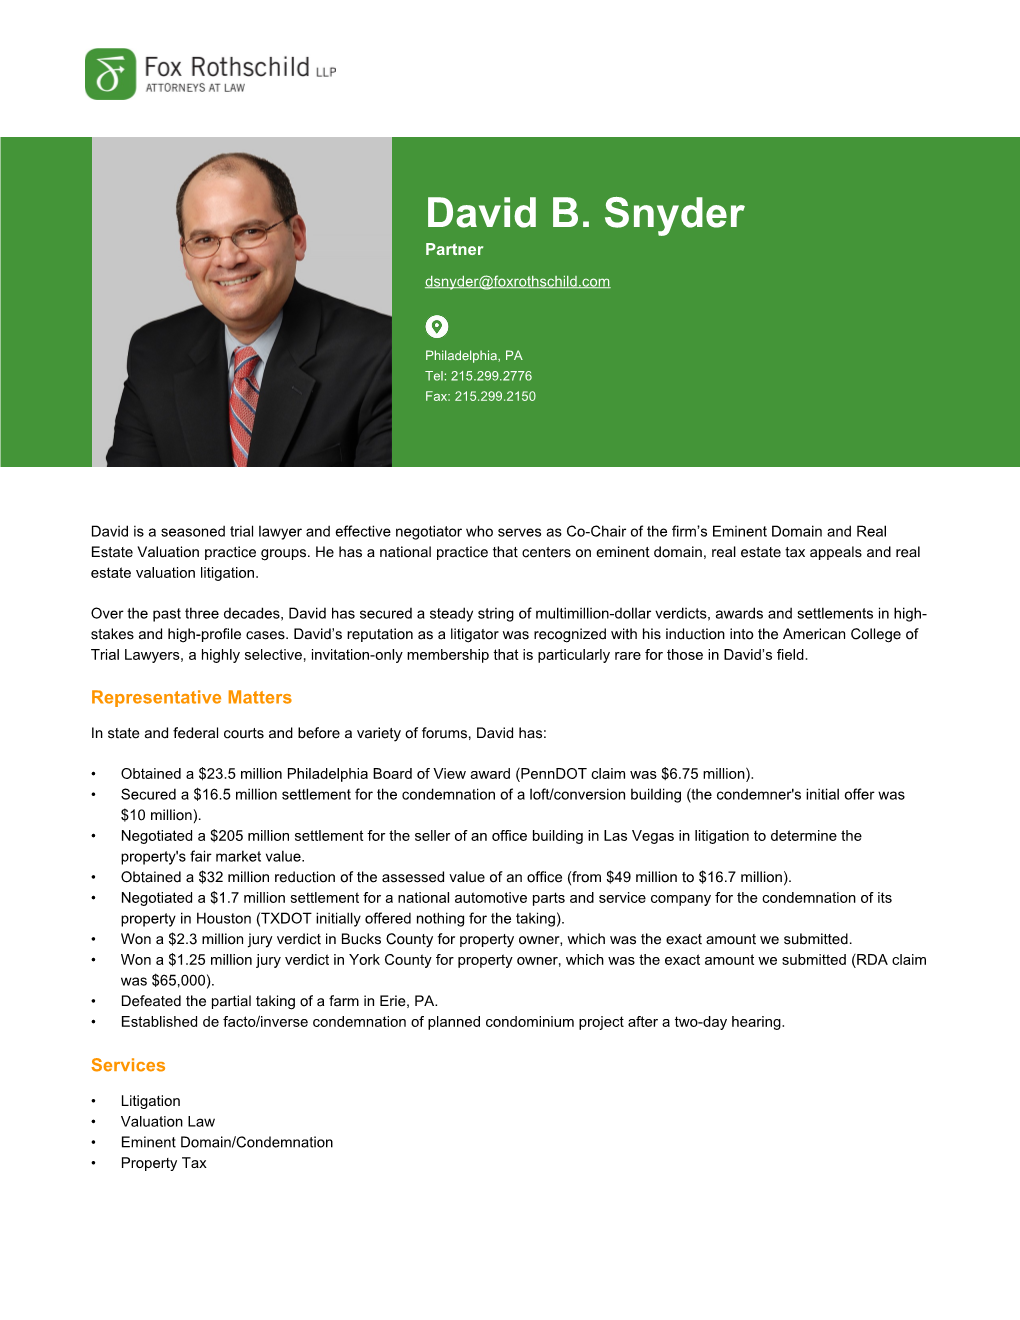 David B. Snyder Partner